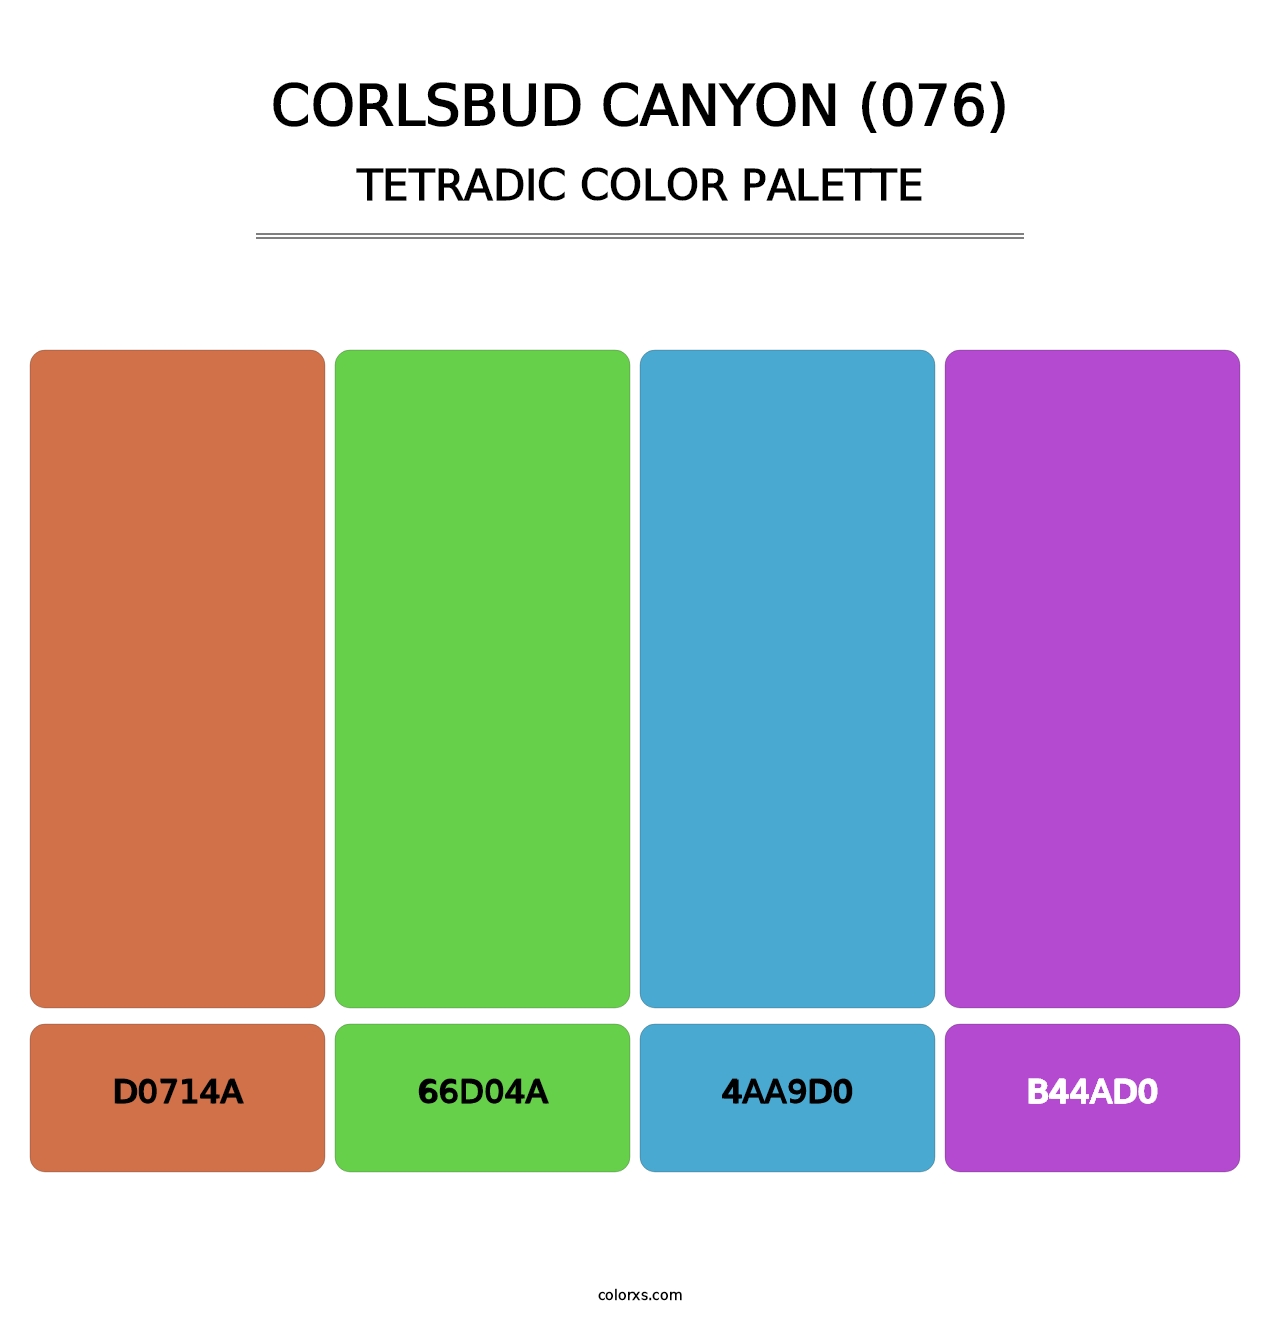 Corlsbud Canyon (076) - Tetradic Color Palette